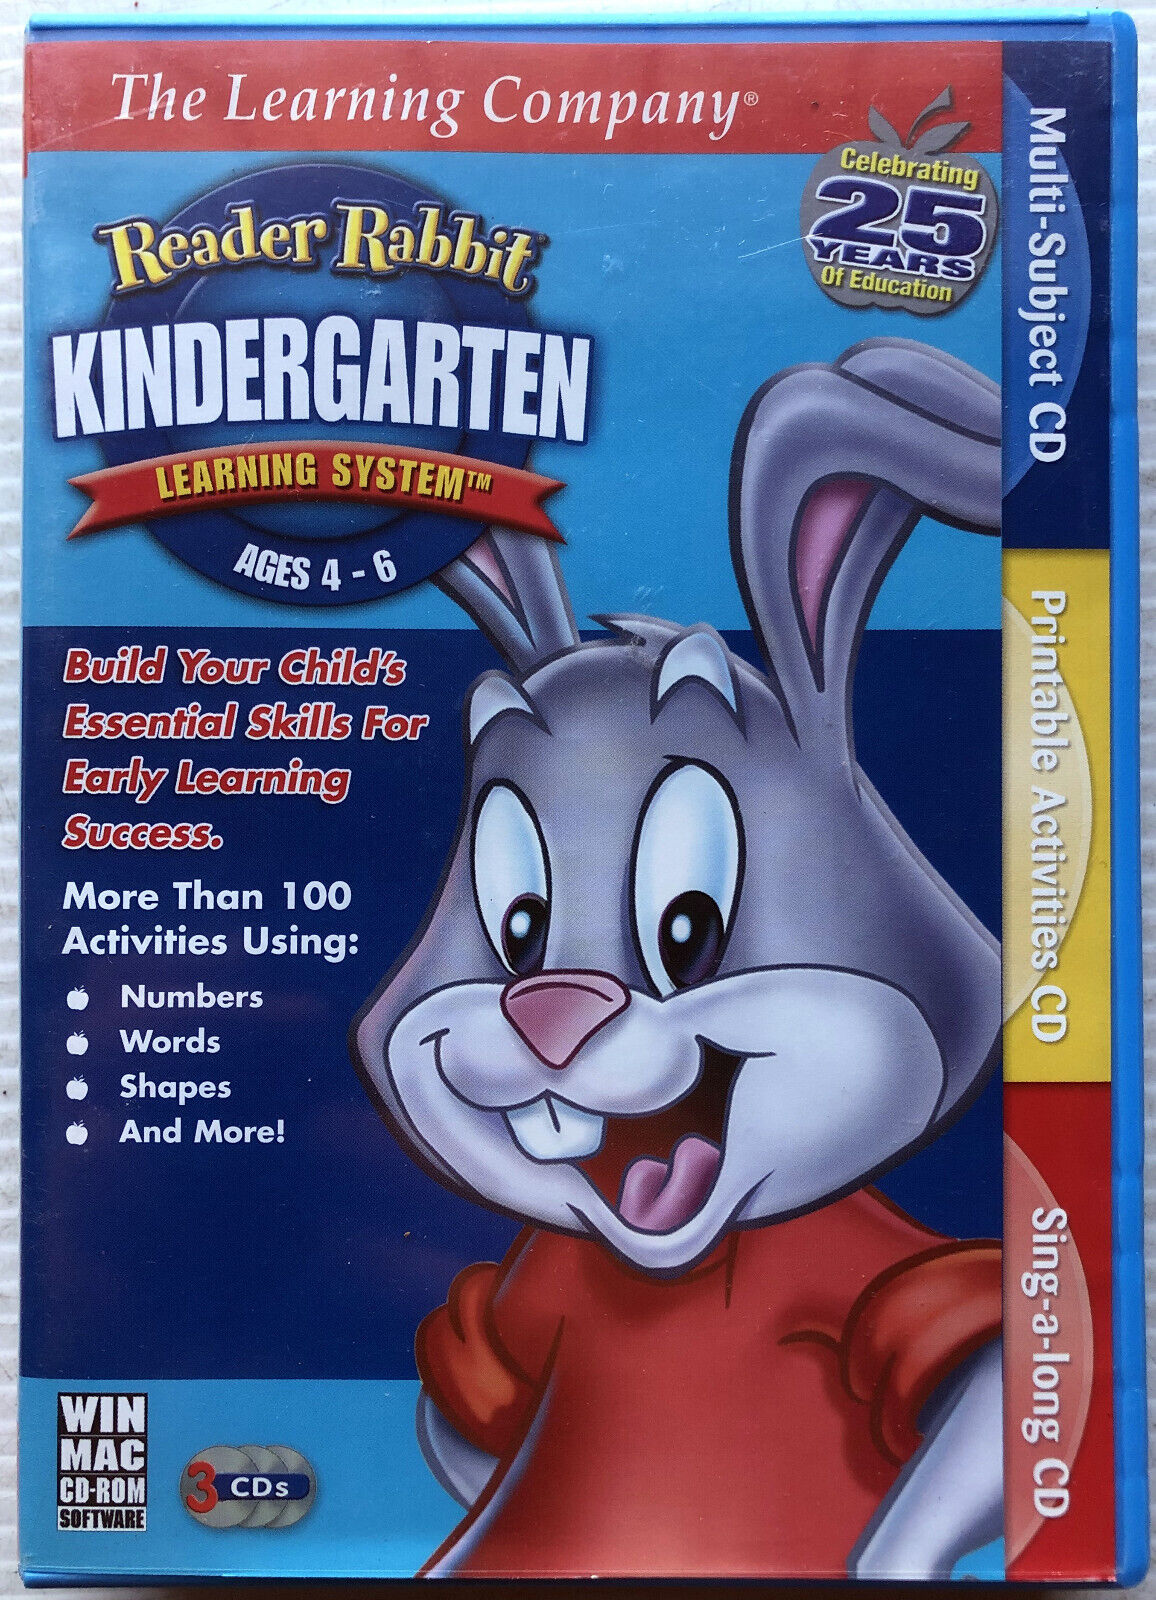 Reader Rabbit Kindergarten Learning System Ages 4-6 (PC CD-ROM, Windows 95 - XP)